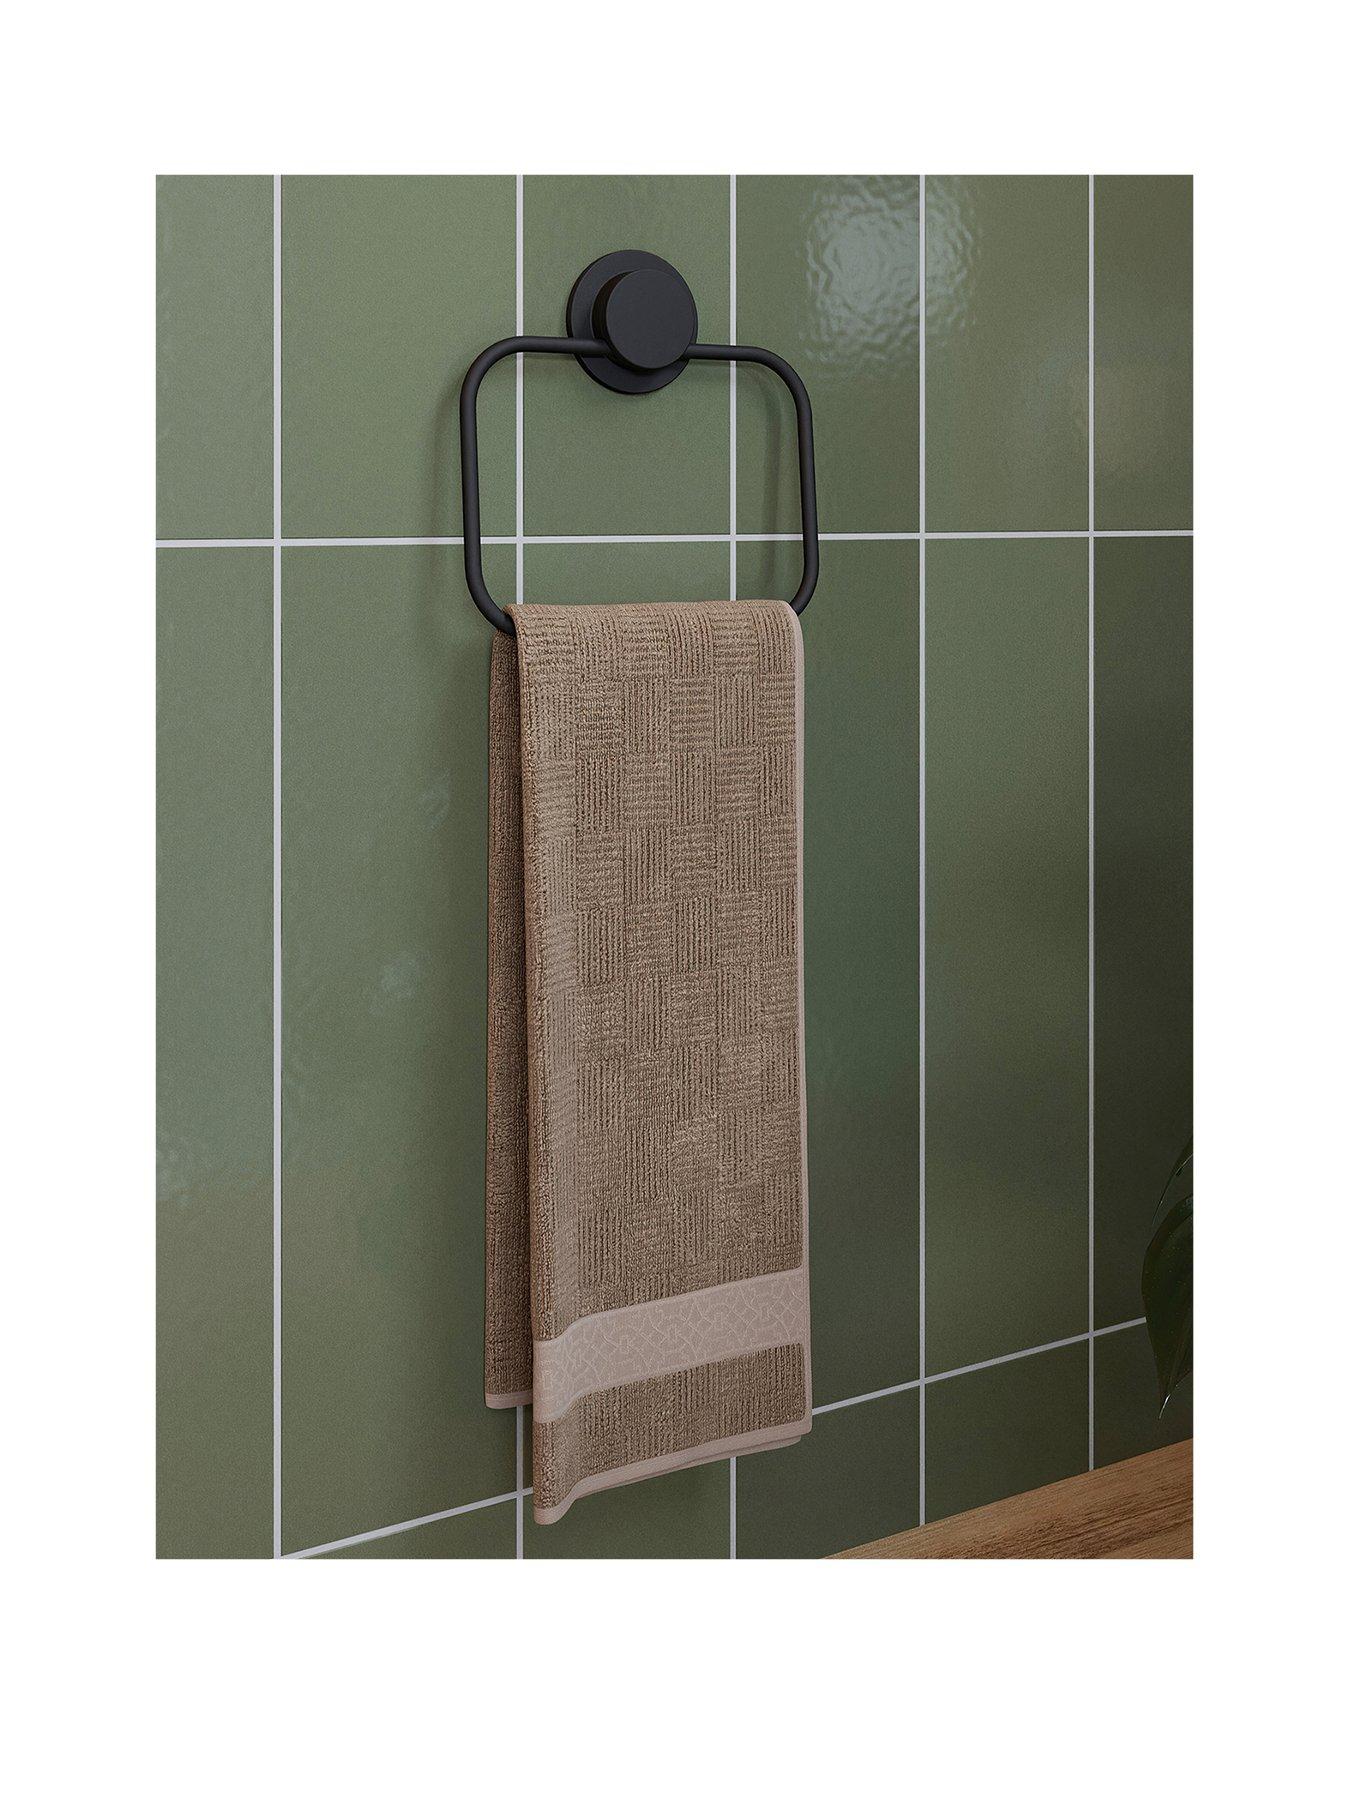 Towel rails & hooks, Bathroom essentials, Home & garden